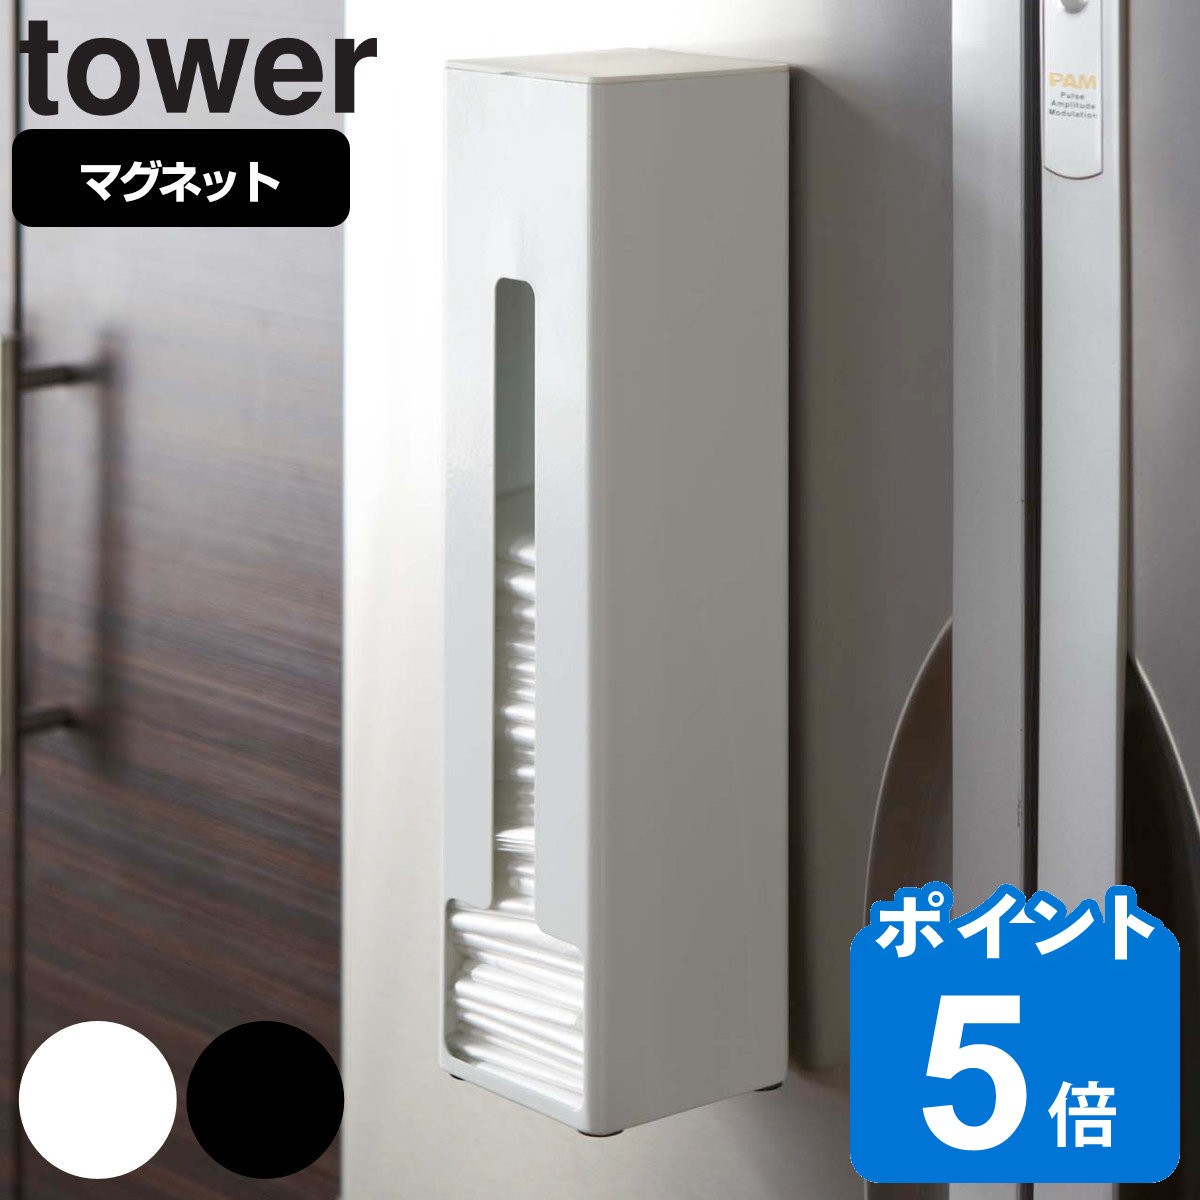 tower |܃XgbJ[ ^[